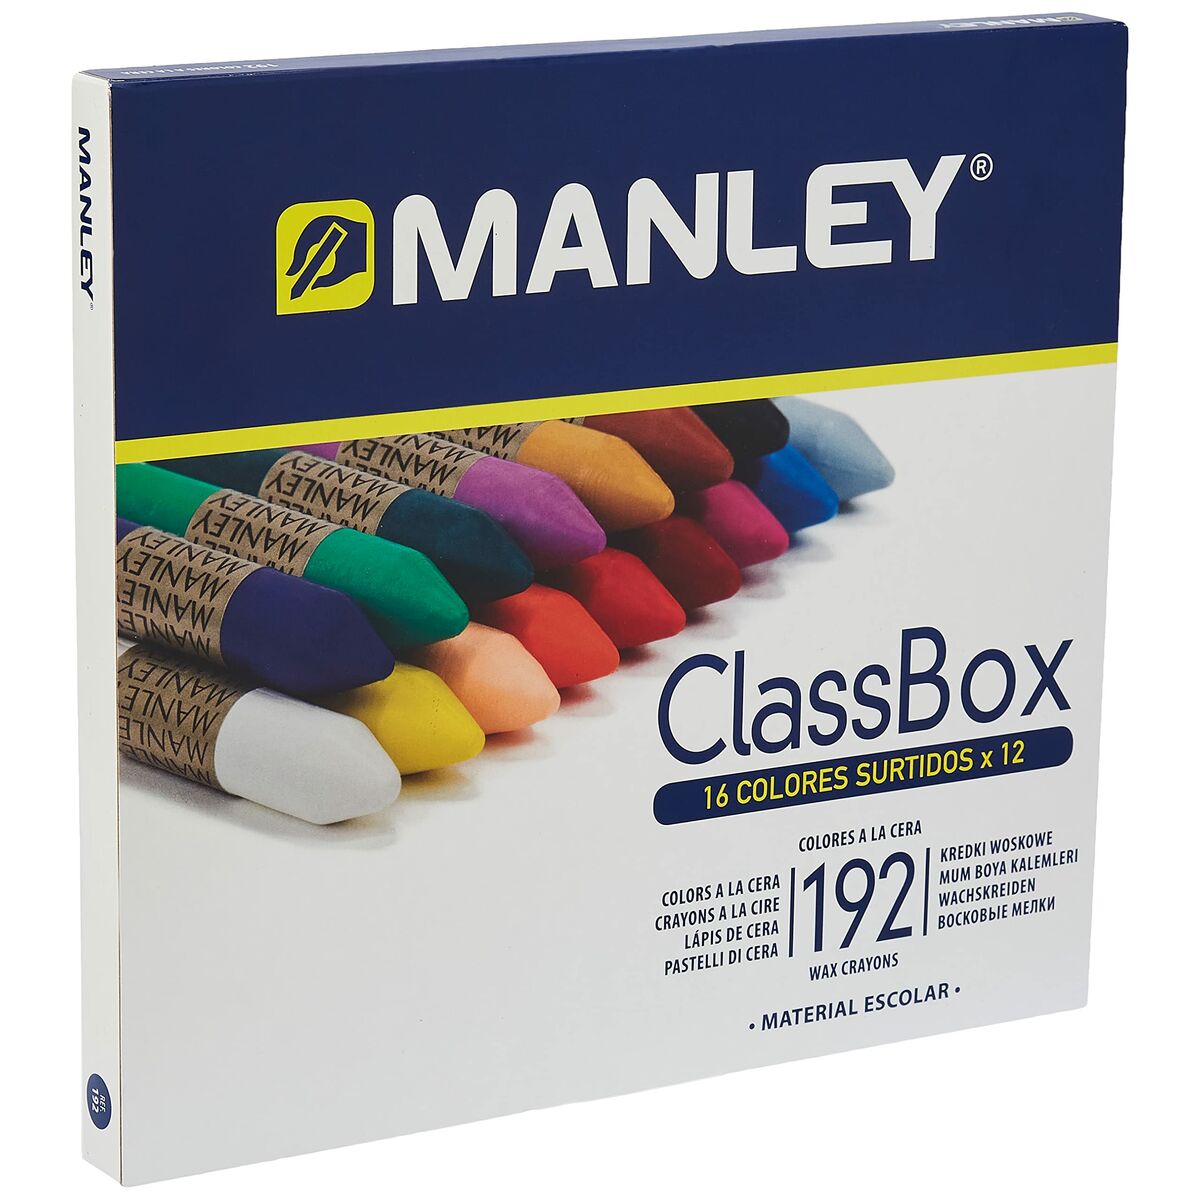 Wachstifte bunt Manley ClassBox 192 Stücke Bunt